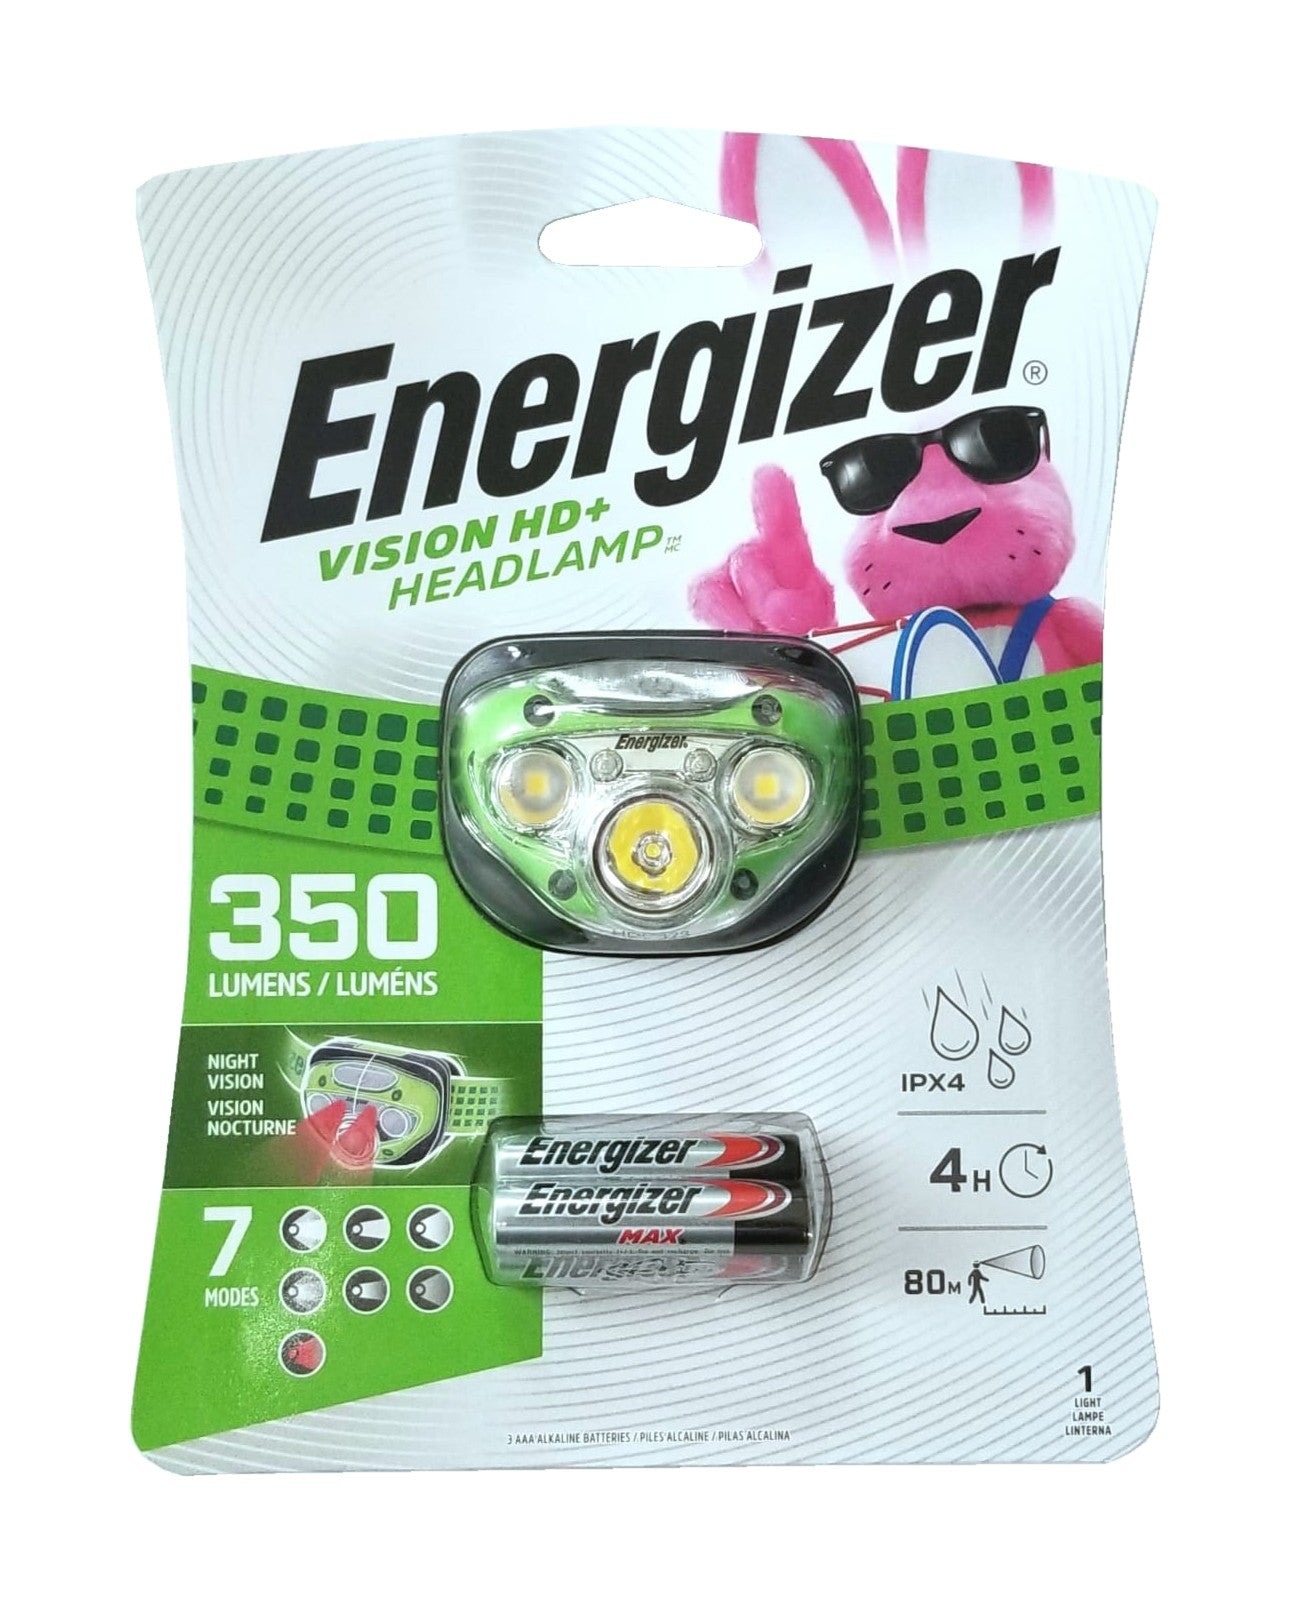 Energizer Vision HD+ Headlight, 350 Lumens